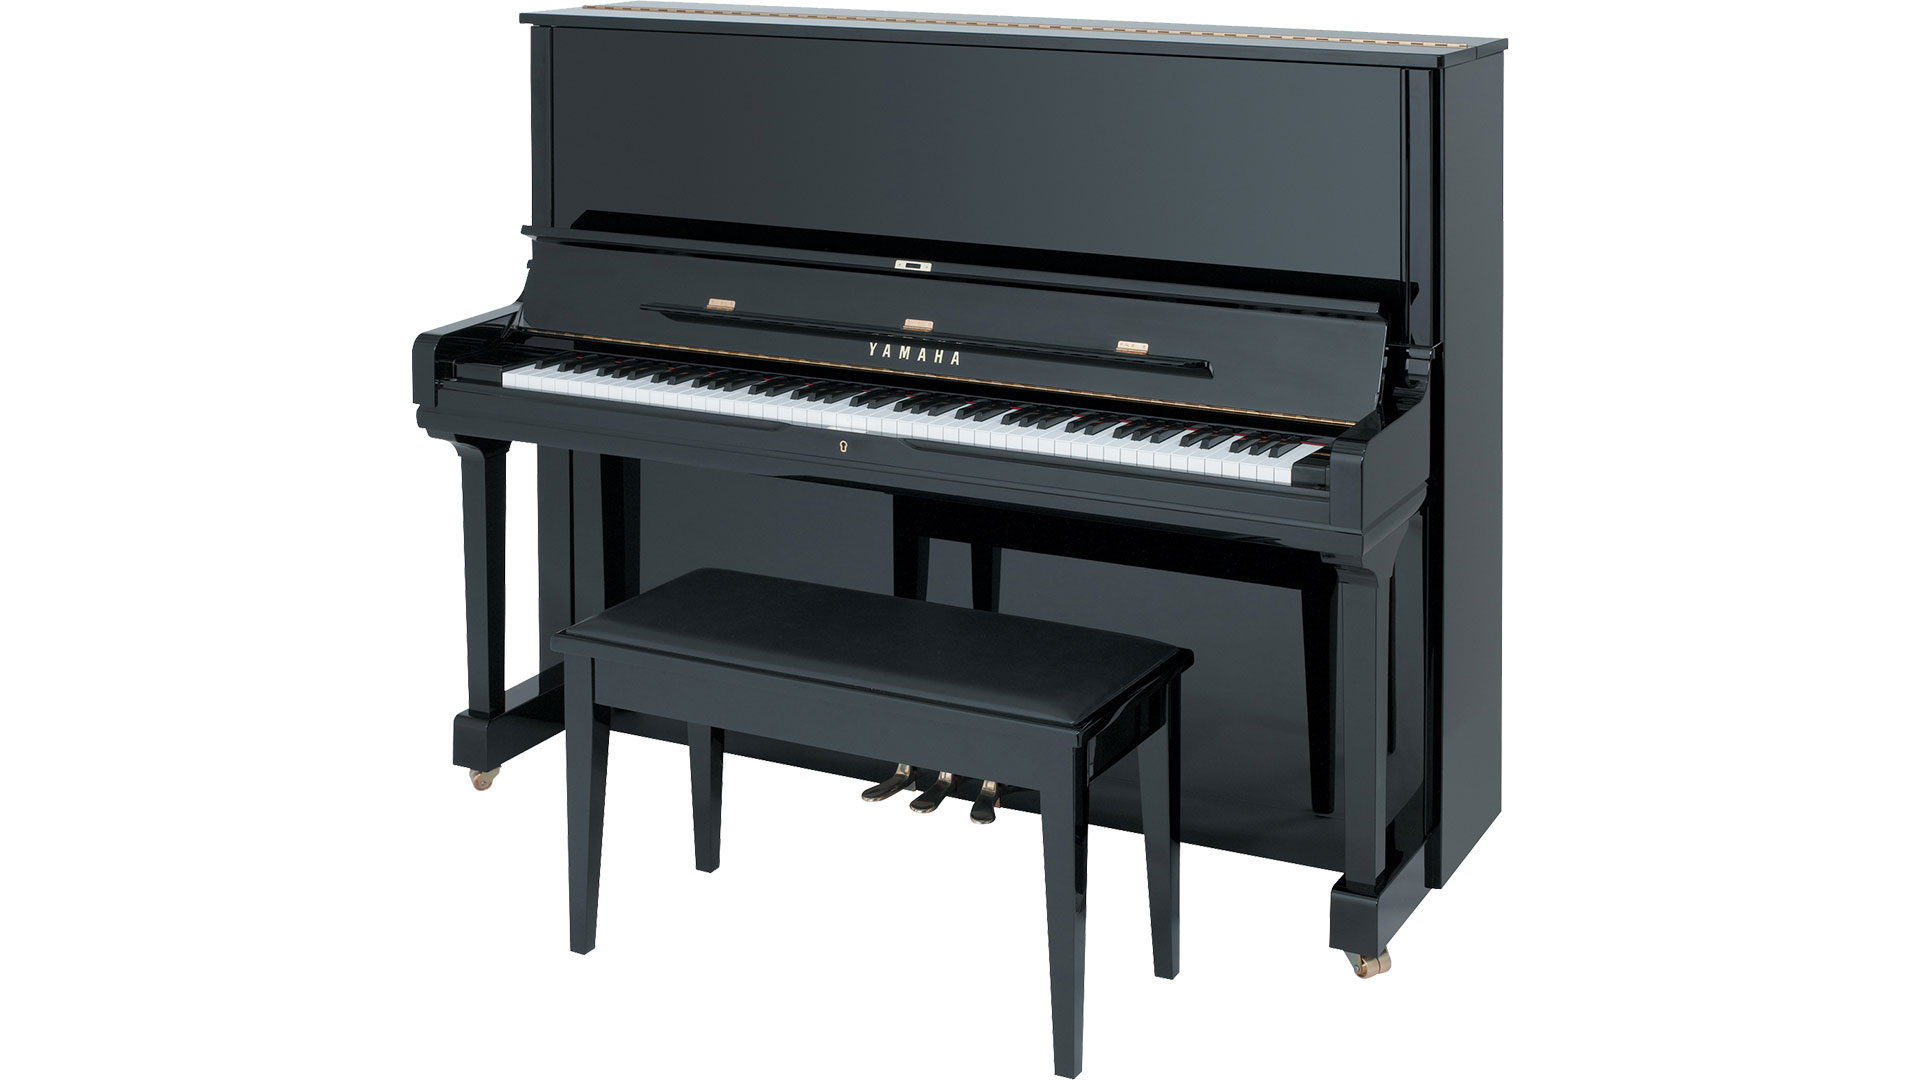 Yamaha piano Model yus3